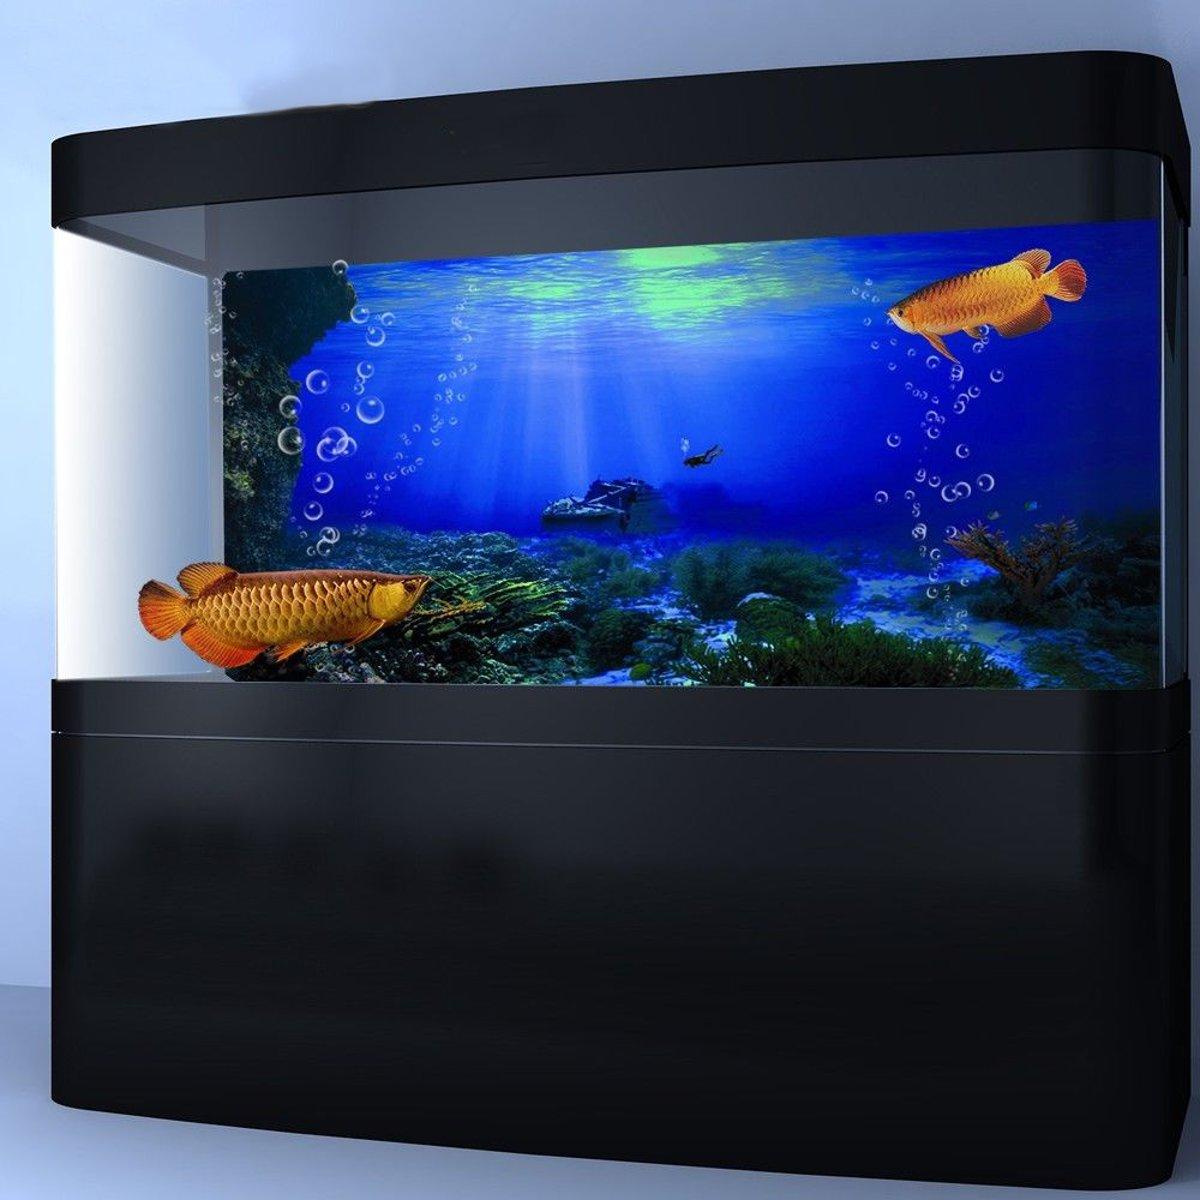 

Seabed Wreck PVC Aquarium HD Background Poster Fish Tank Decorations Landscape